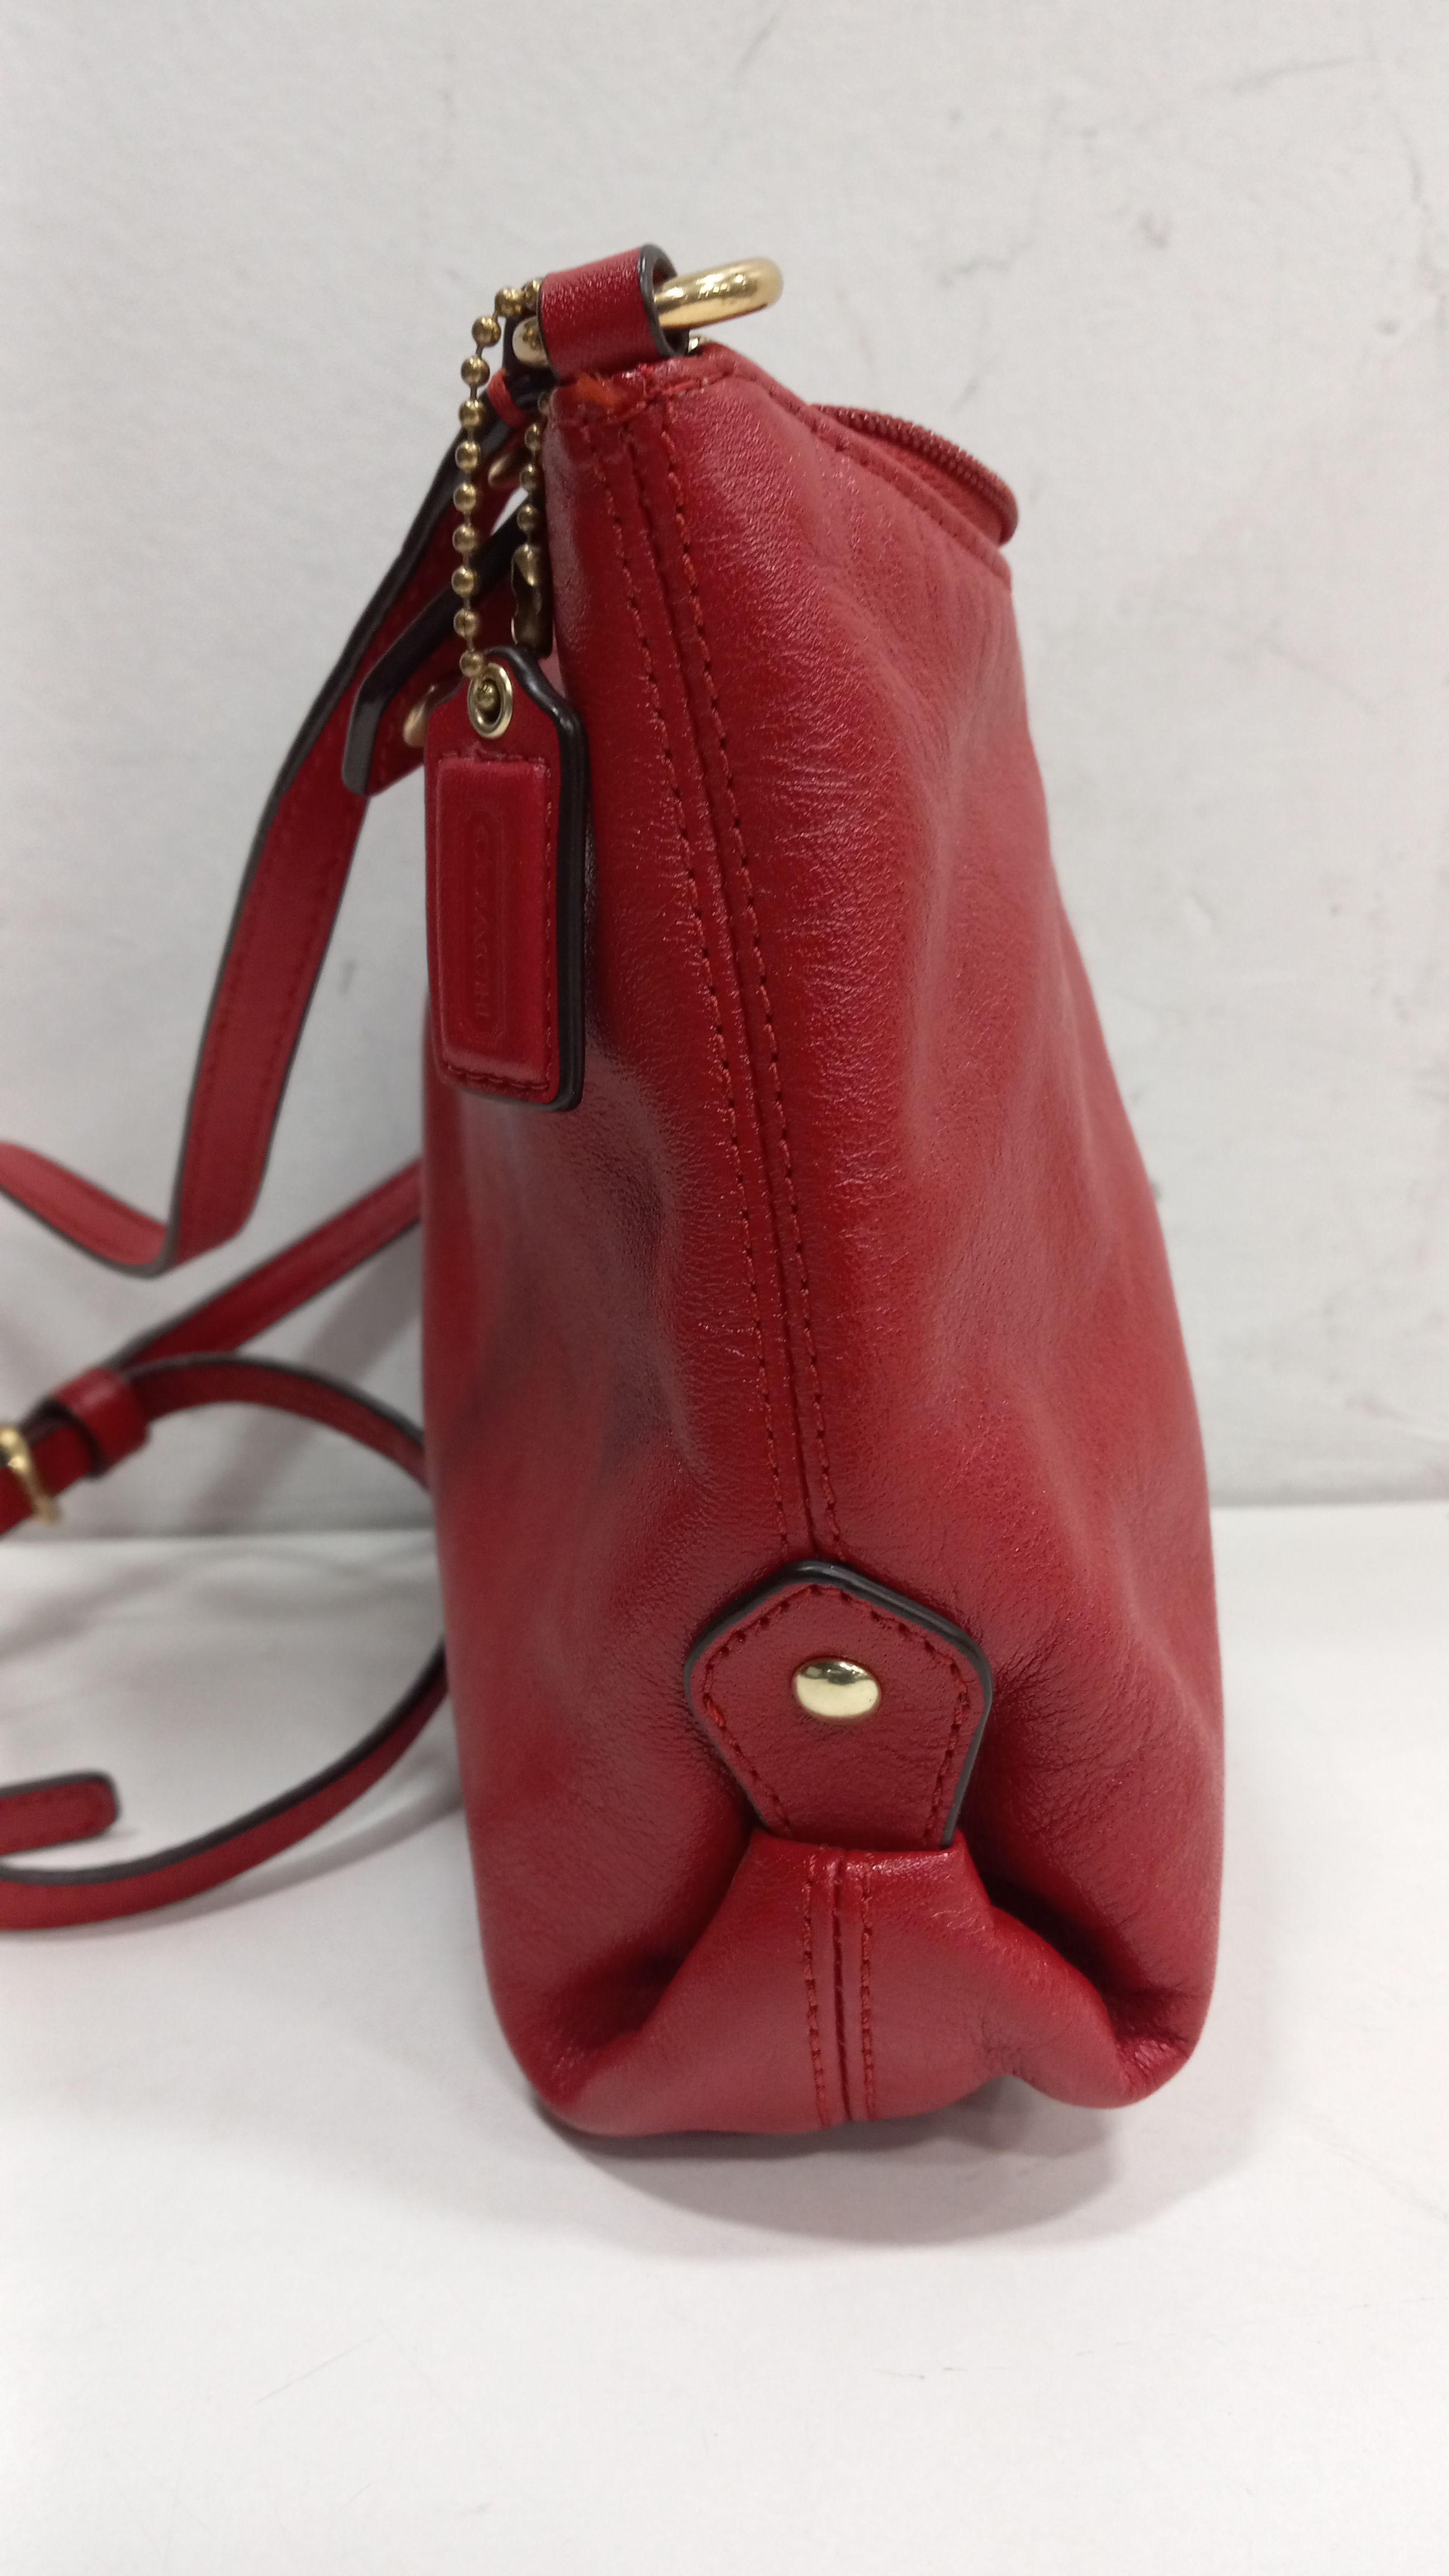 Vintage Coach Bucket Bag, Red Leather, Cross-Body Bag Purse 9952 | eBay